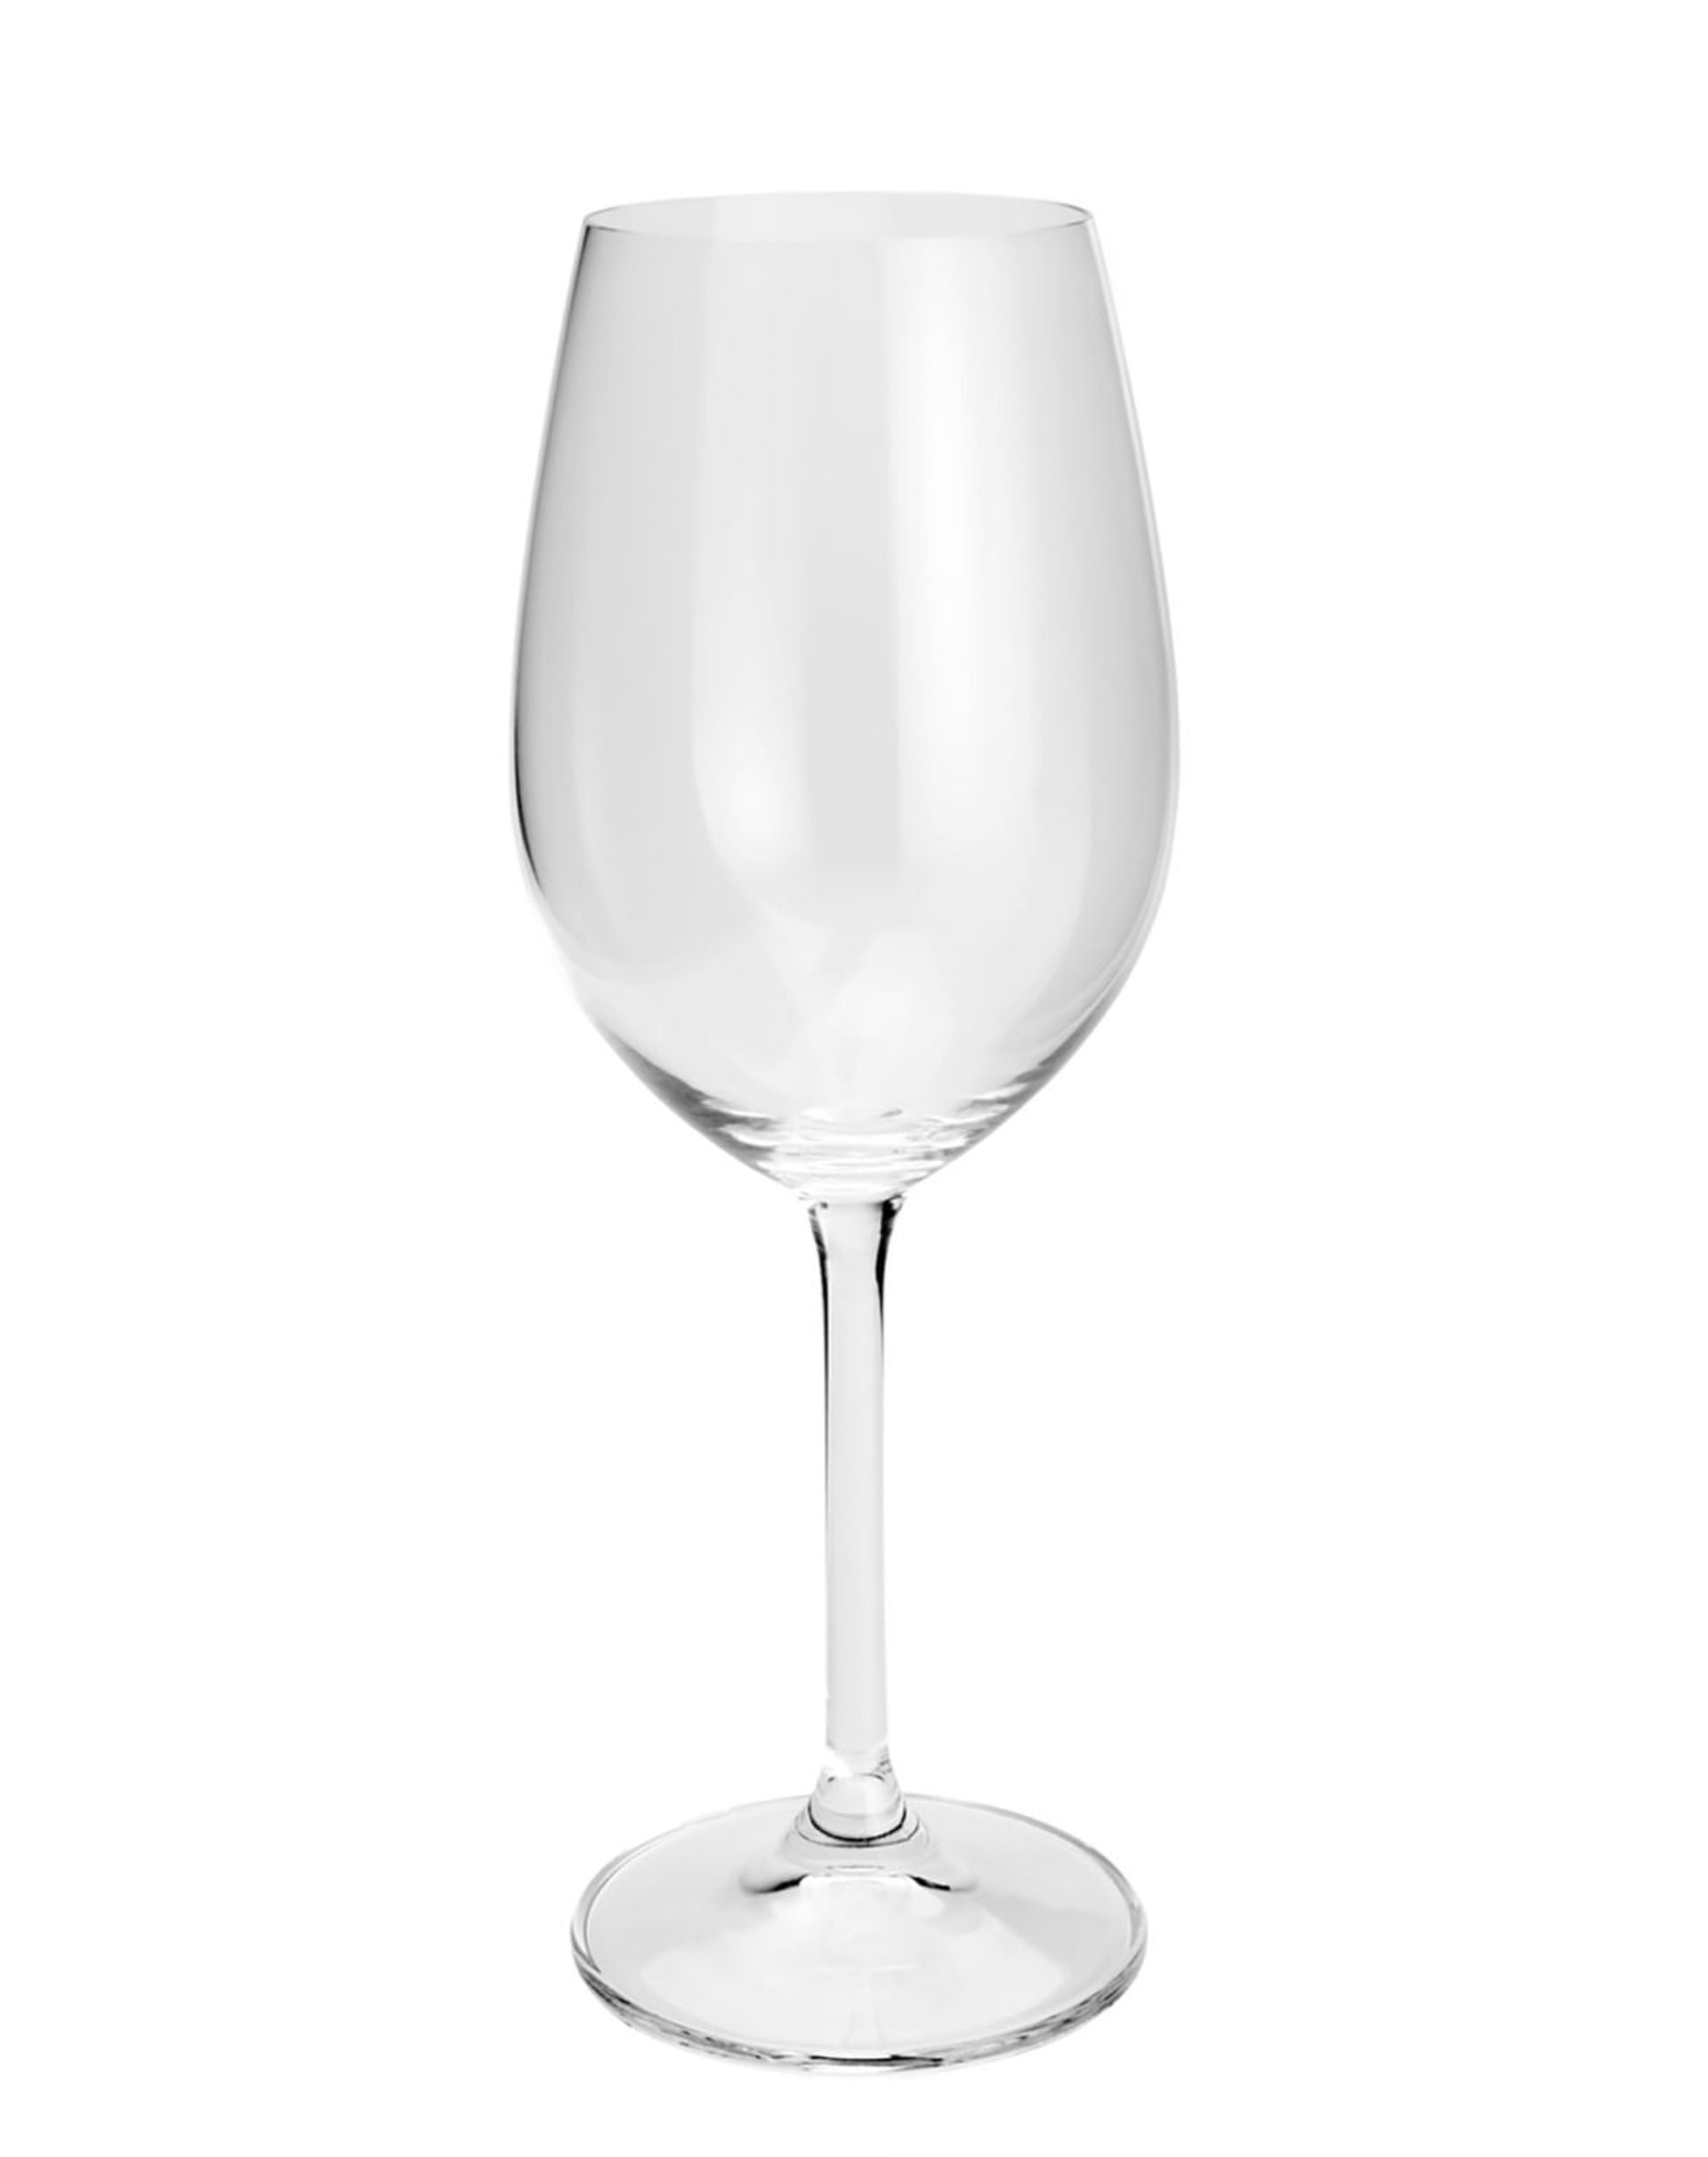 Conjunto 6 Taças de Vinho Branco de Cristal Ecológico Gastro/Colibri 350ml - Wolff - TRANSPARENTE